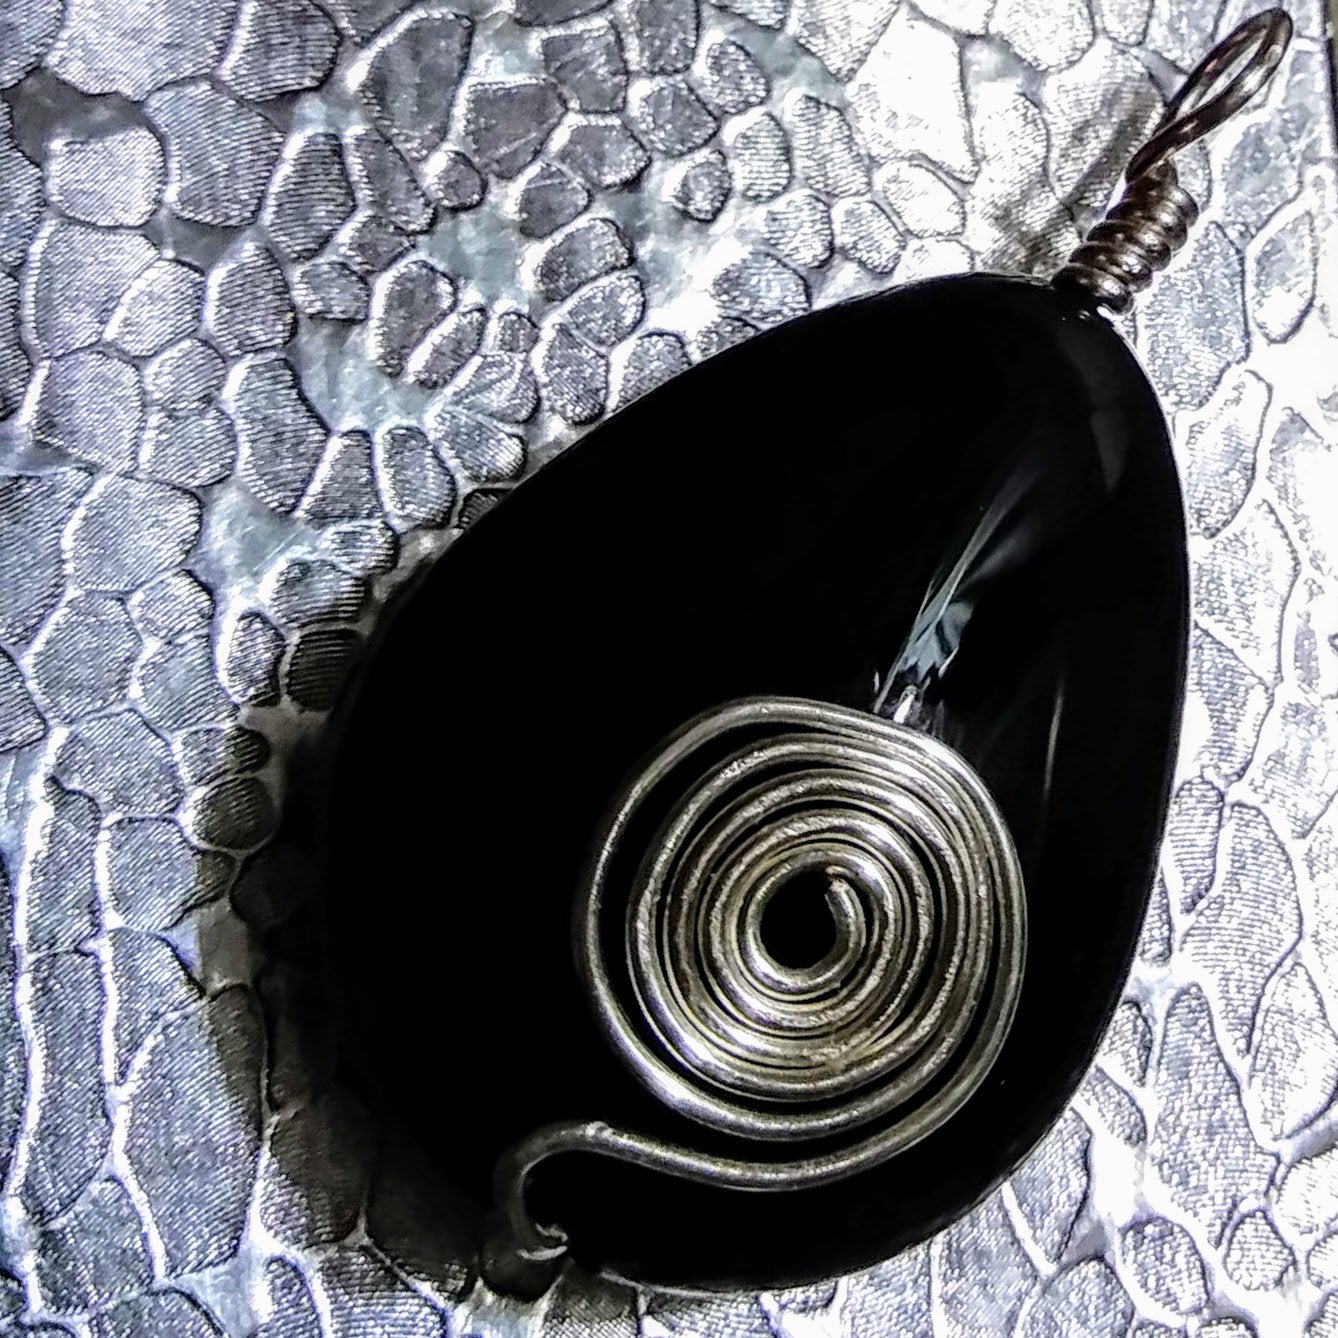 Glossy Black Onyx Teardrop Pendant w Silver Spiral Wire Wrap